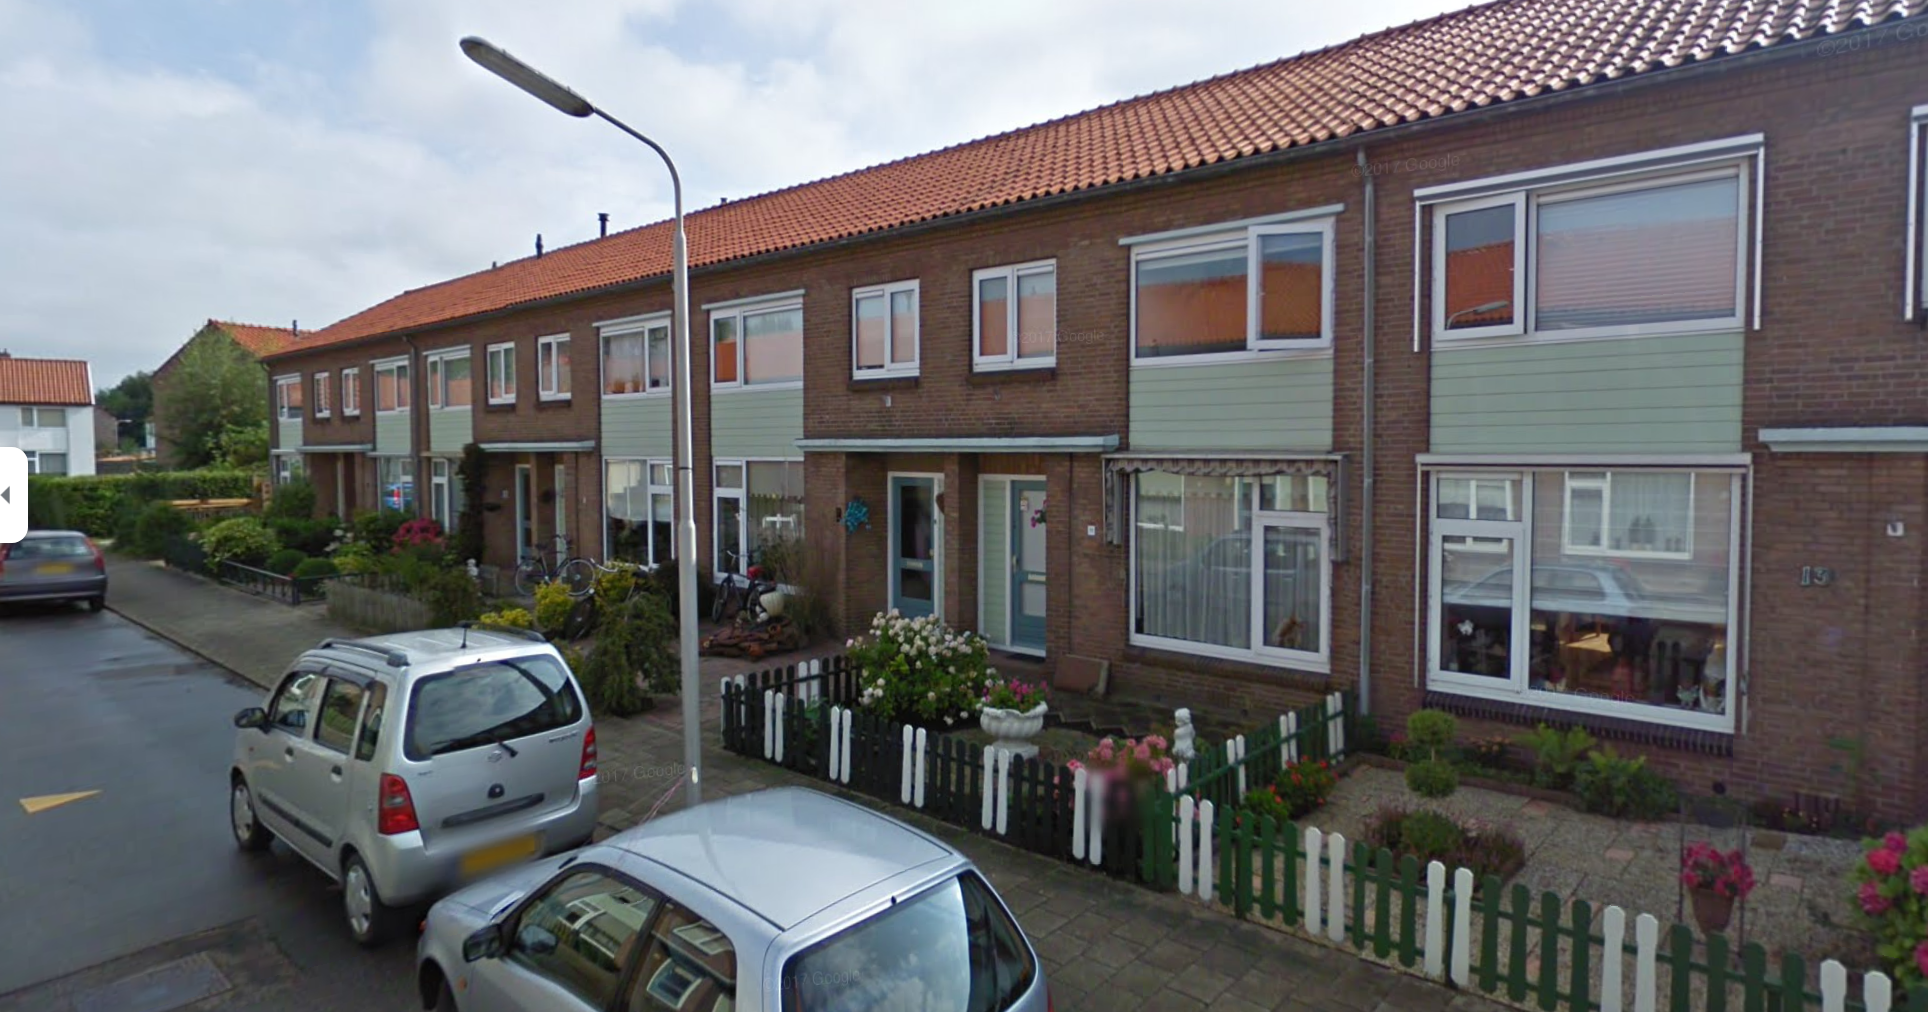 De Blankenstraat 9, 2377 VB Oude Wetering, Nederland